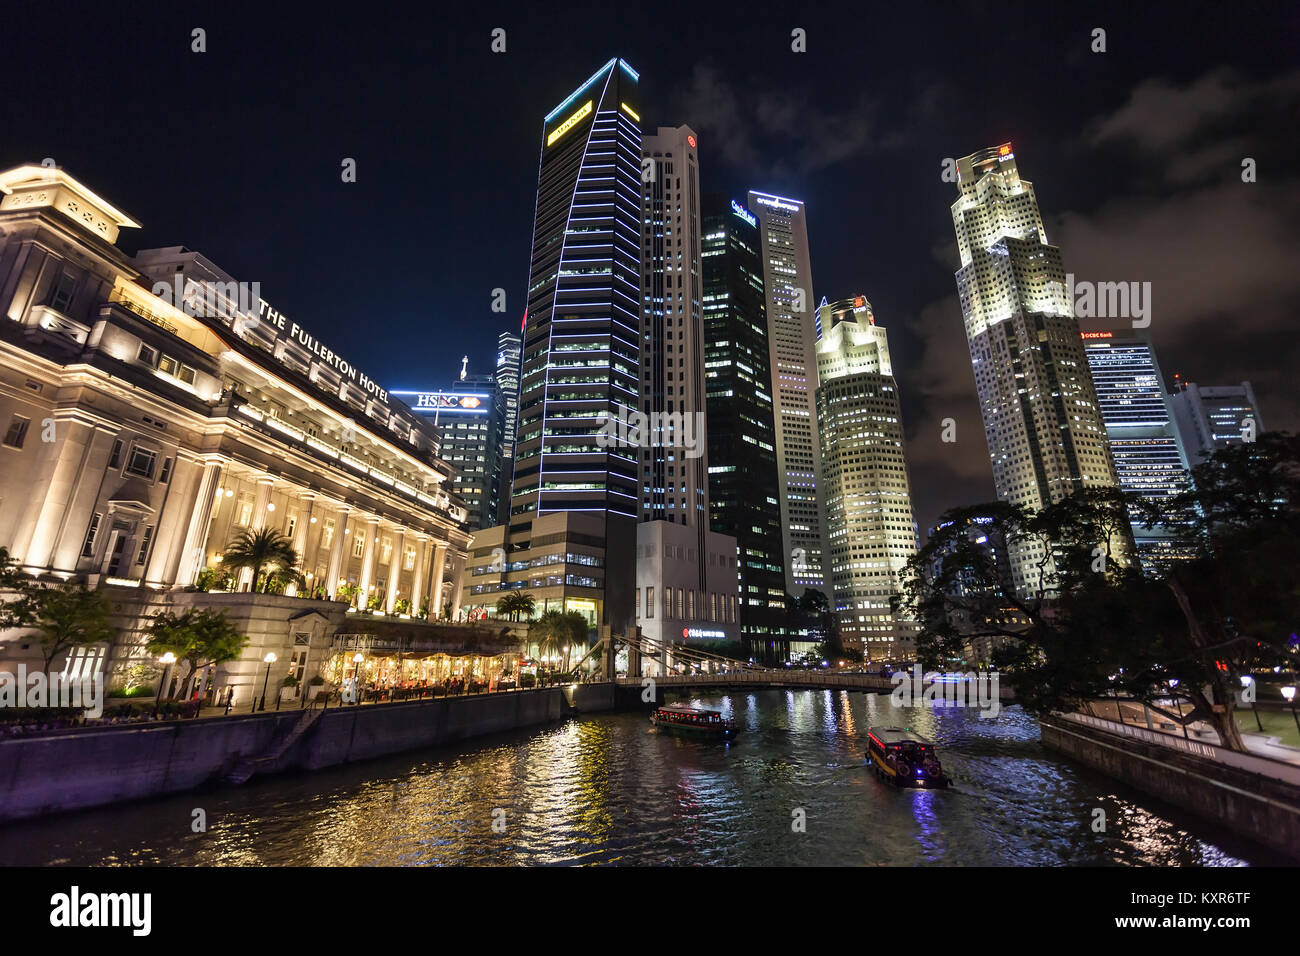 SINGAPORE - OCTOBER 17, 2014: Singapore city skyline at night. Stock Photo